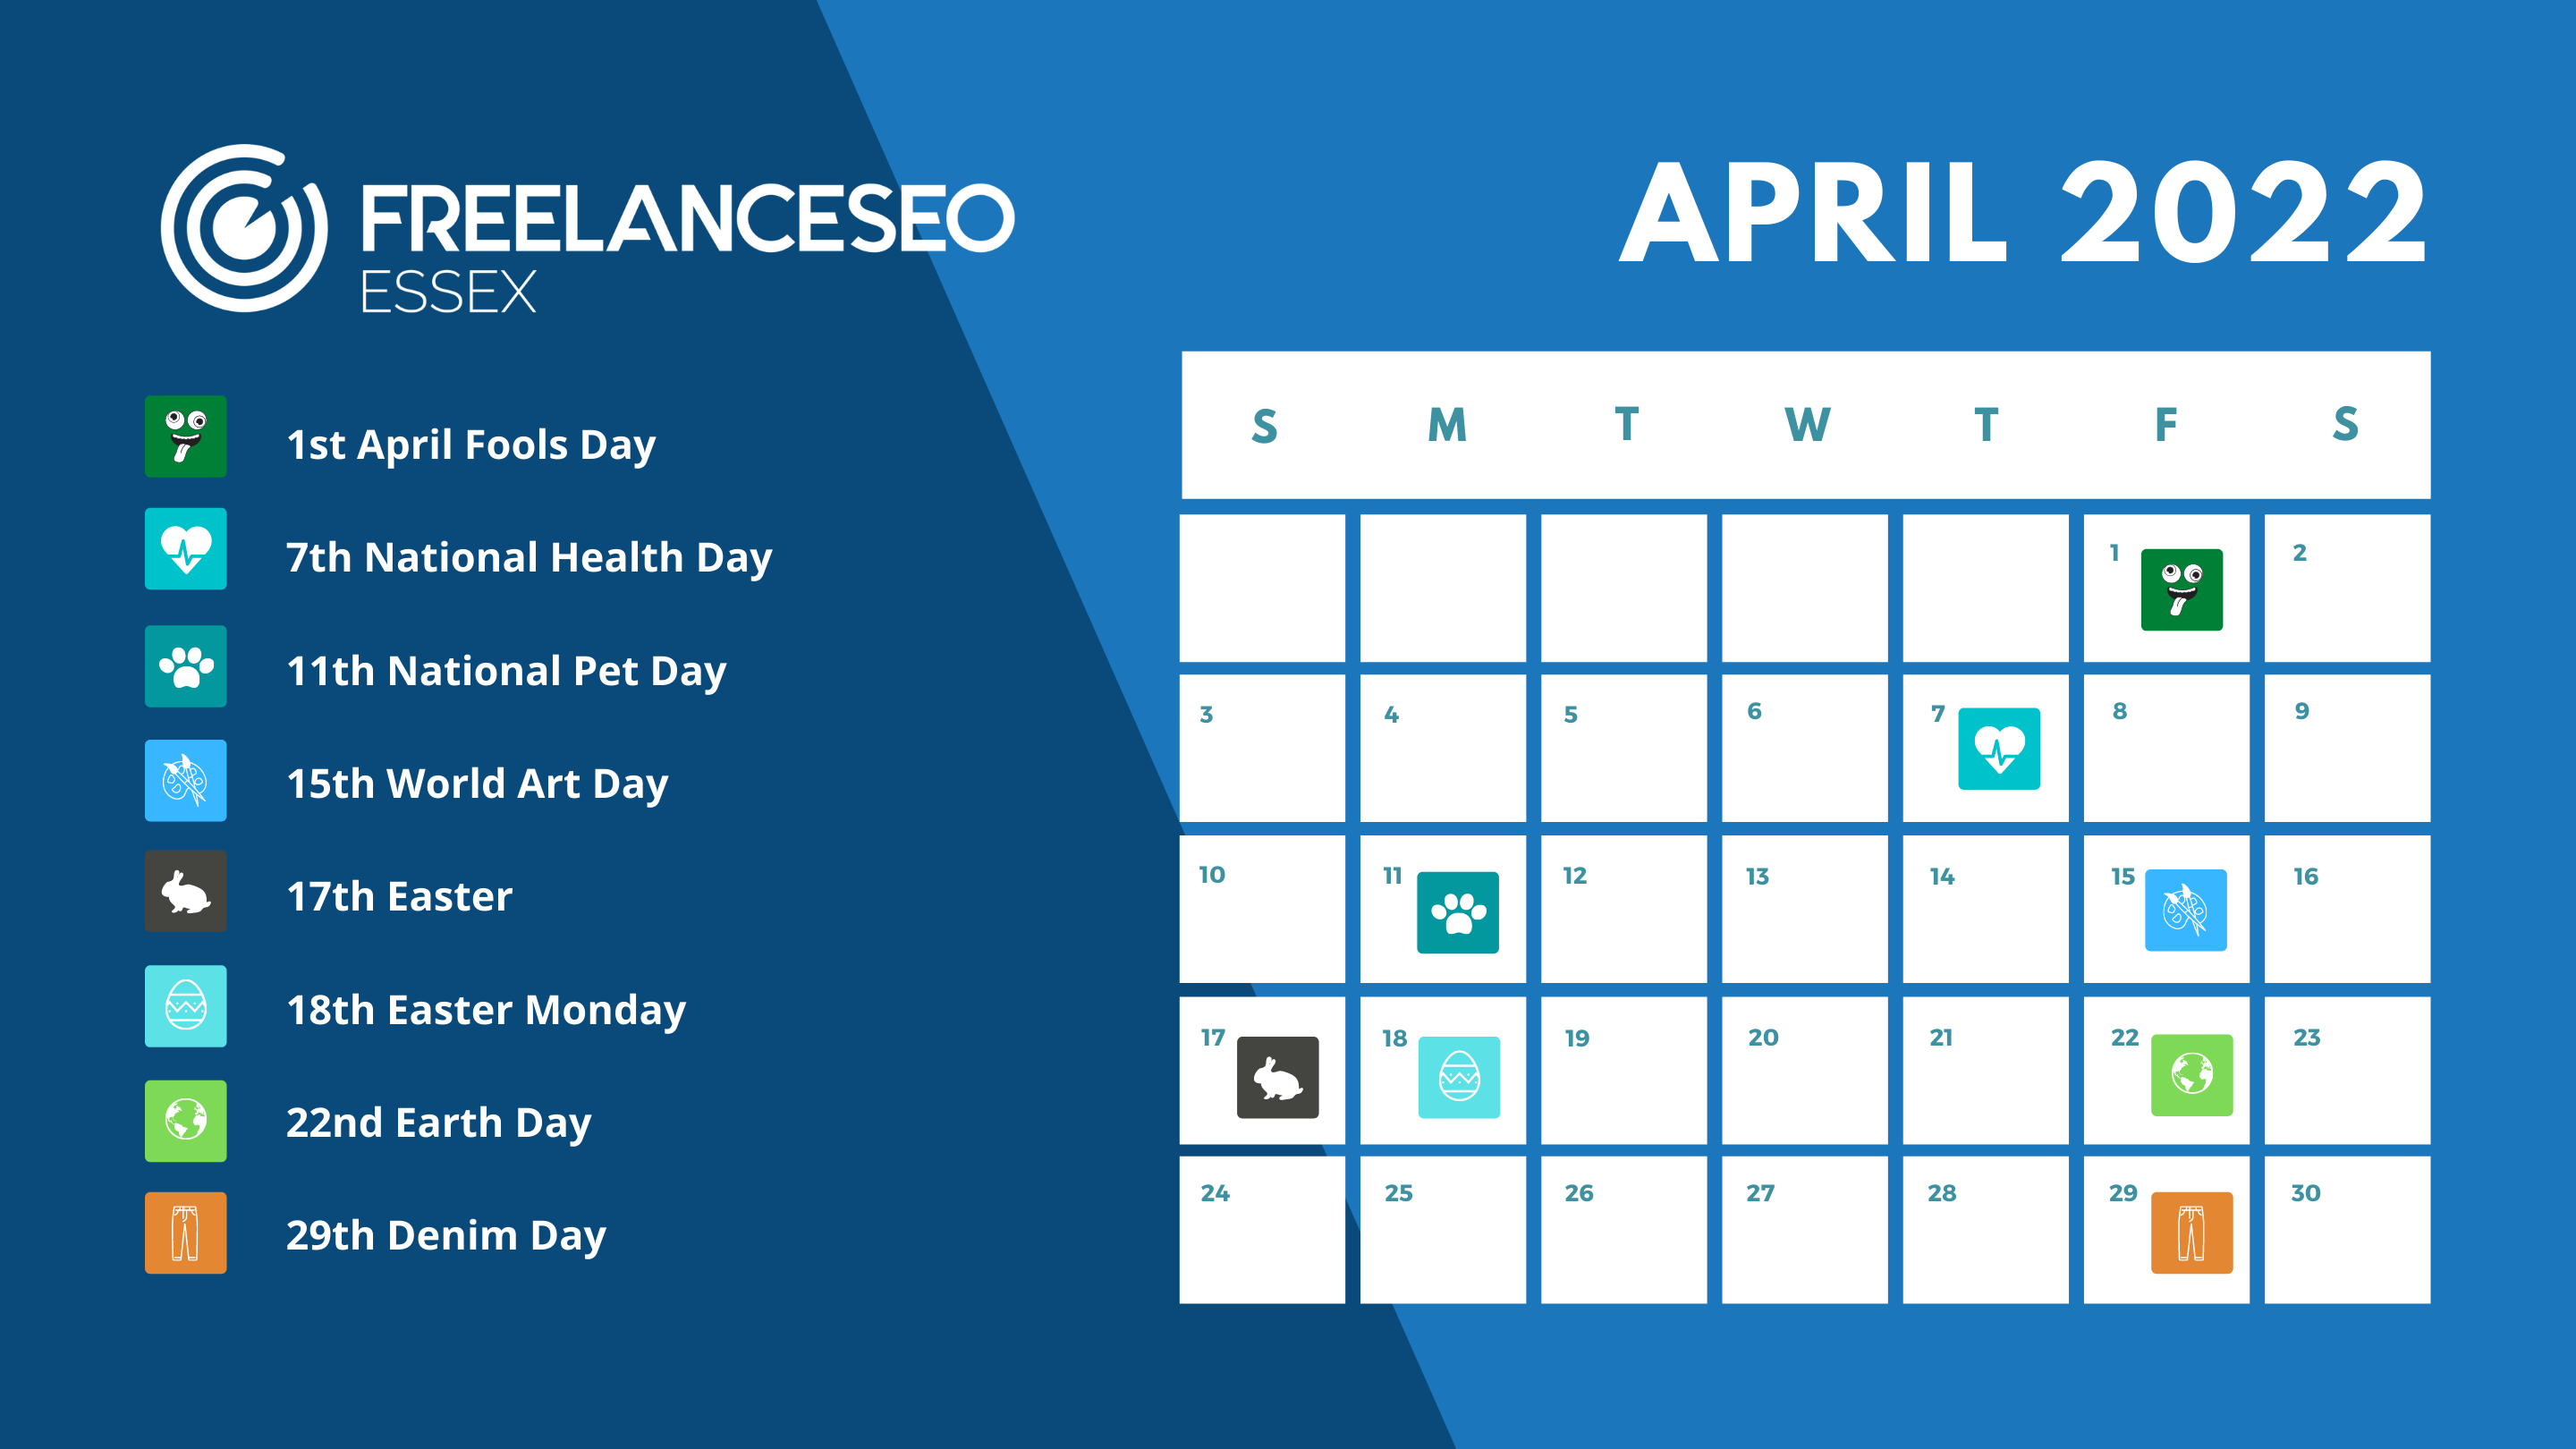 April 2022 Social calendar dates for your diary